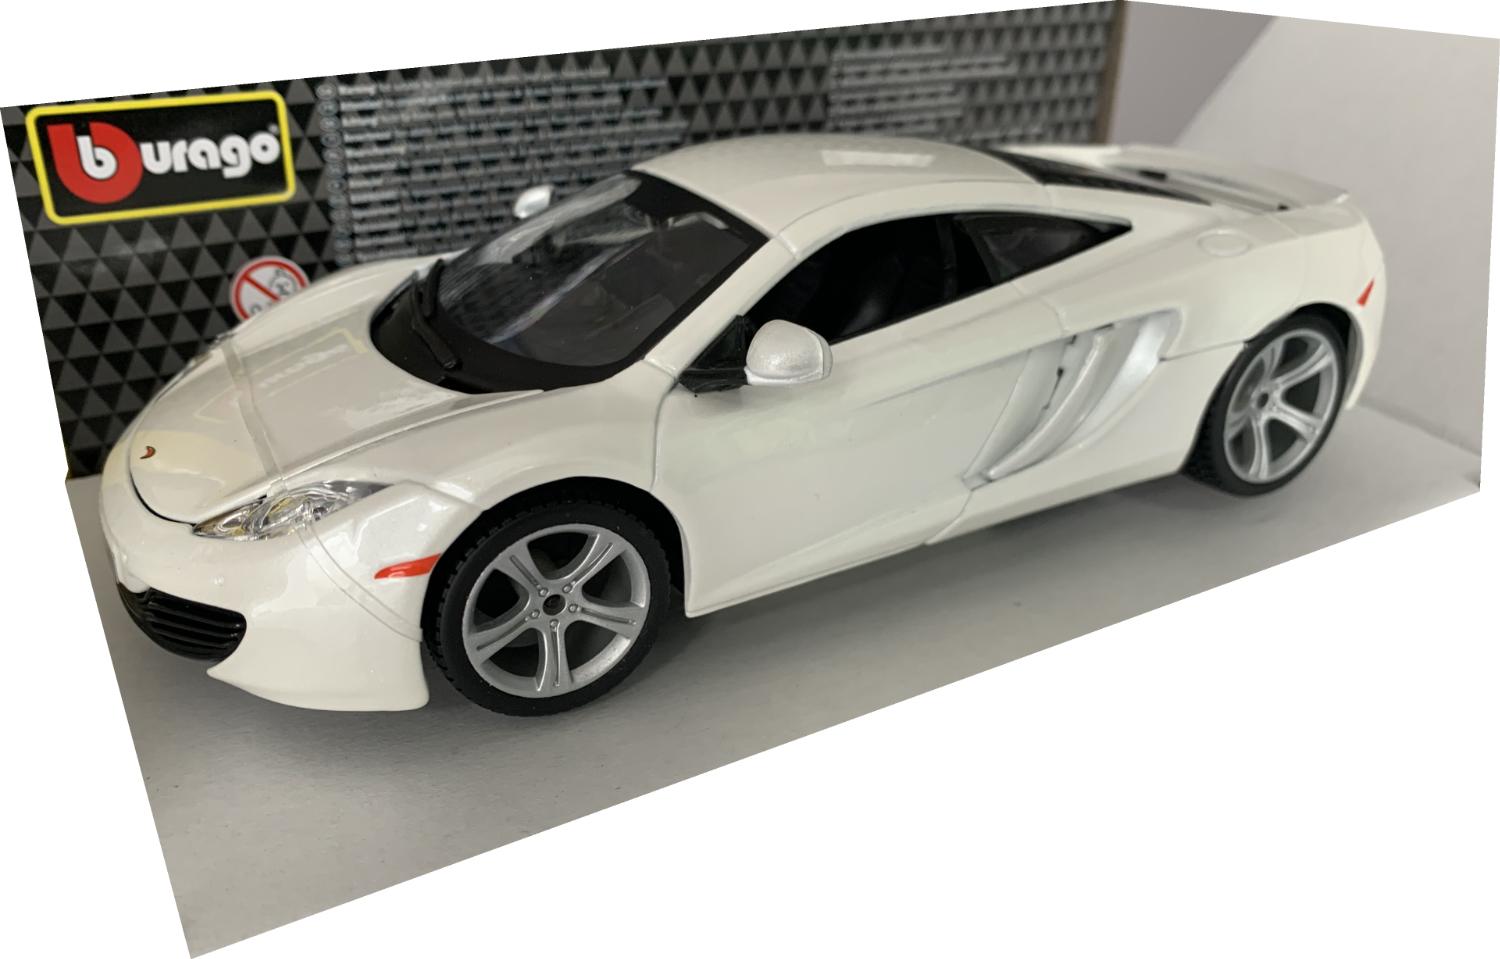 McLaren 12C in white 1:24 scale model from Bburago